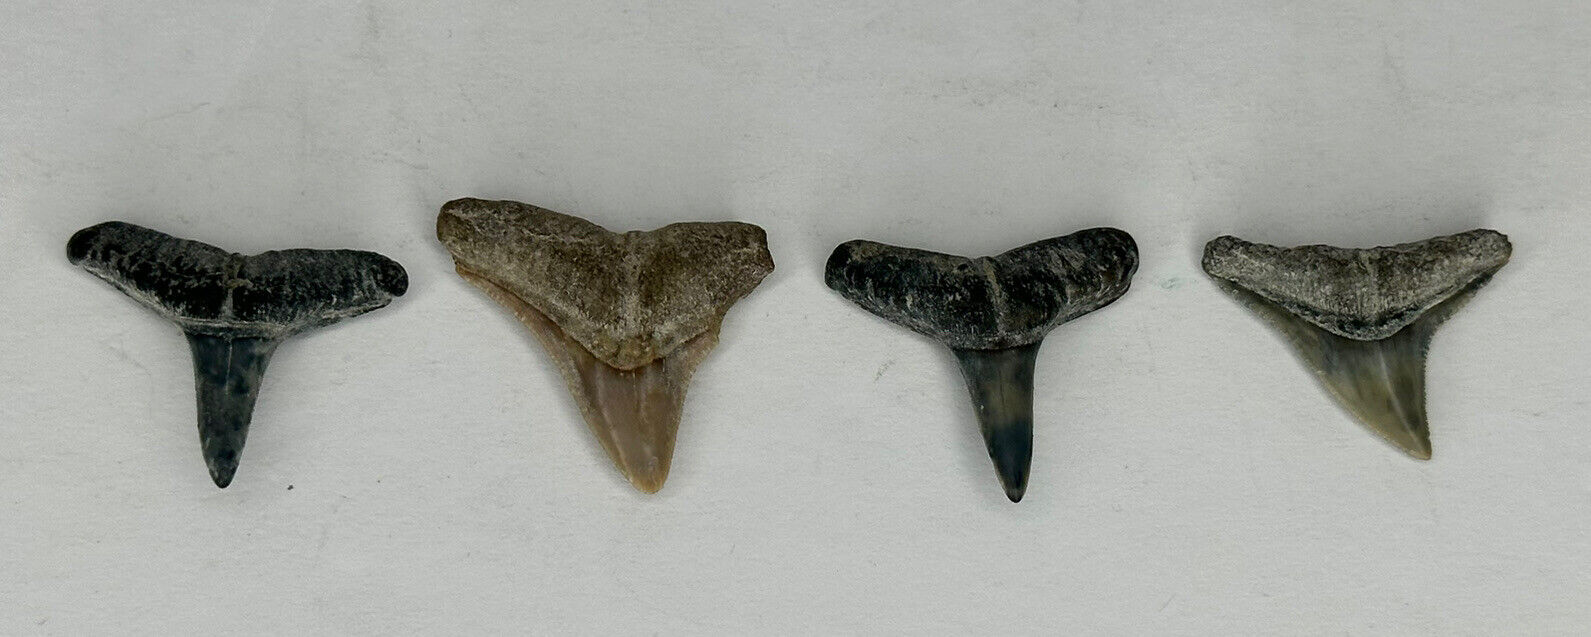 Estate Lot 4 Old Prehistoric Fossils Teeth Shark Ancient Marine Relics Specimens